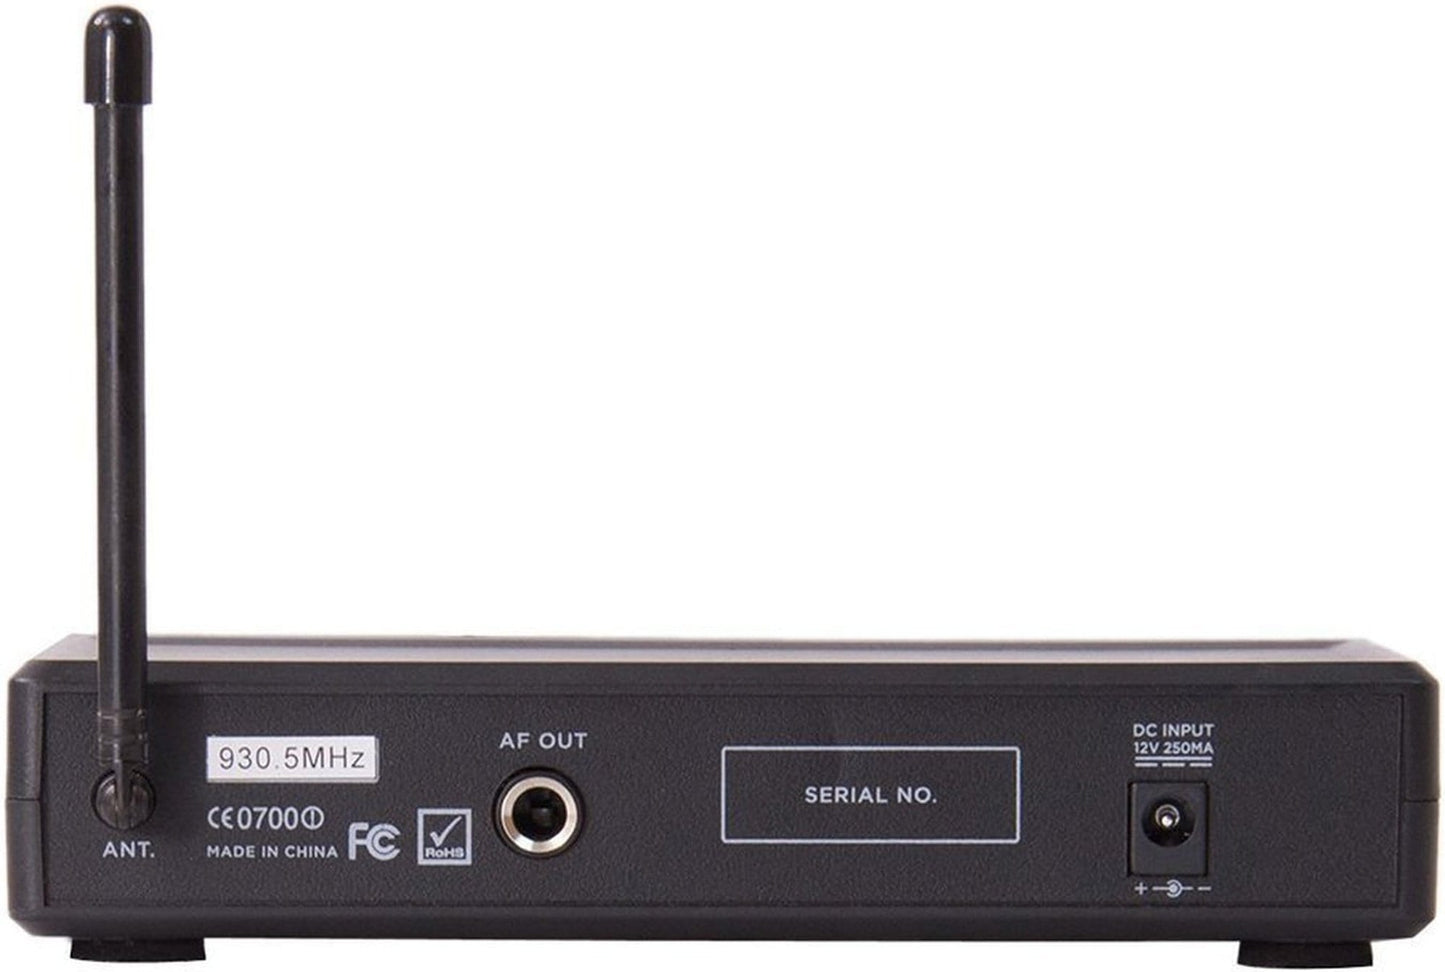 Gemini UHF-01HL-F1 UHF Lavalier Wireless Mic System - ProSound and Stage Lighting